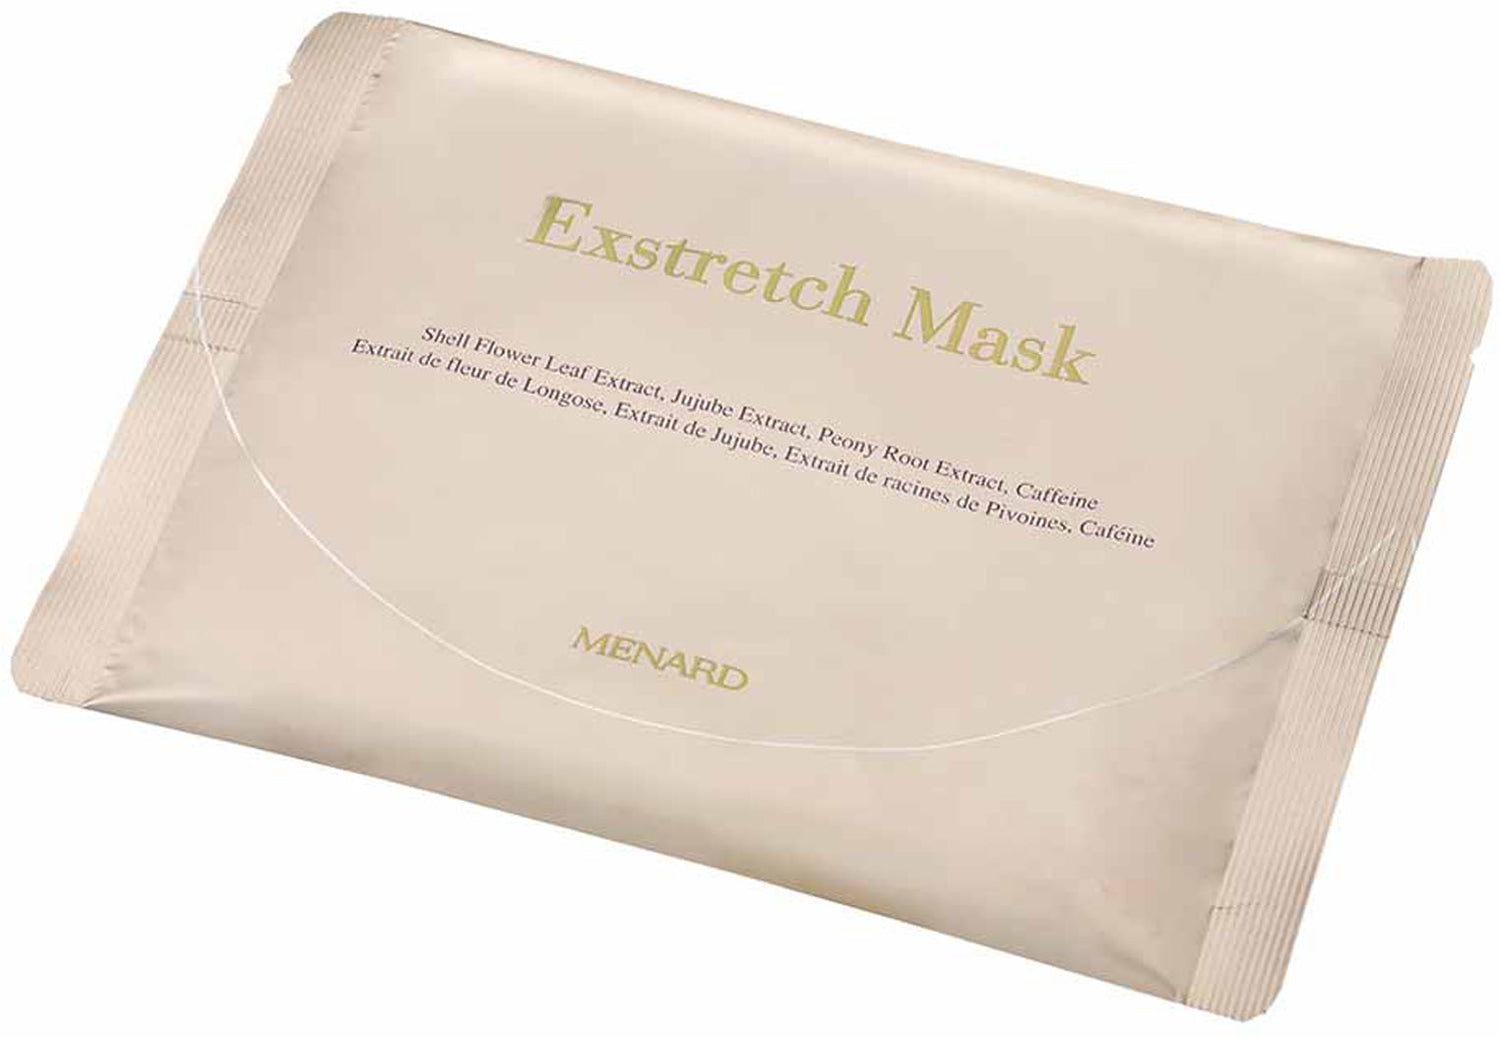 exstretch mask